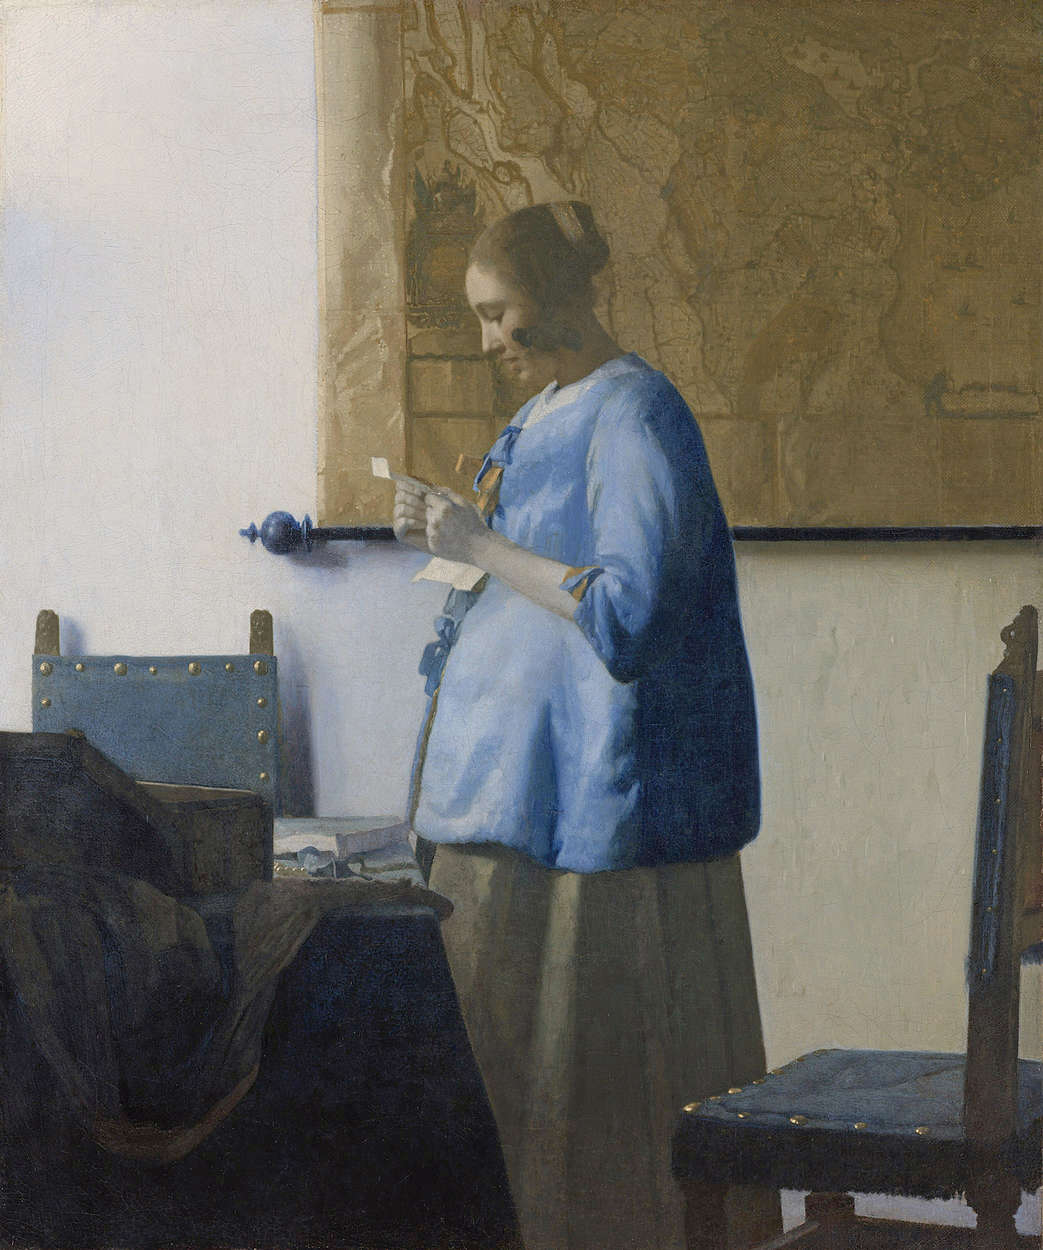             Fotomurali "Donna che legge una lettera" di Jan Vermeer
        